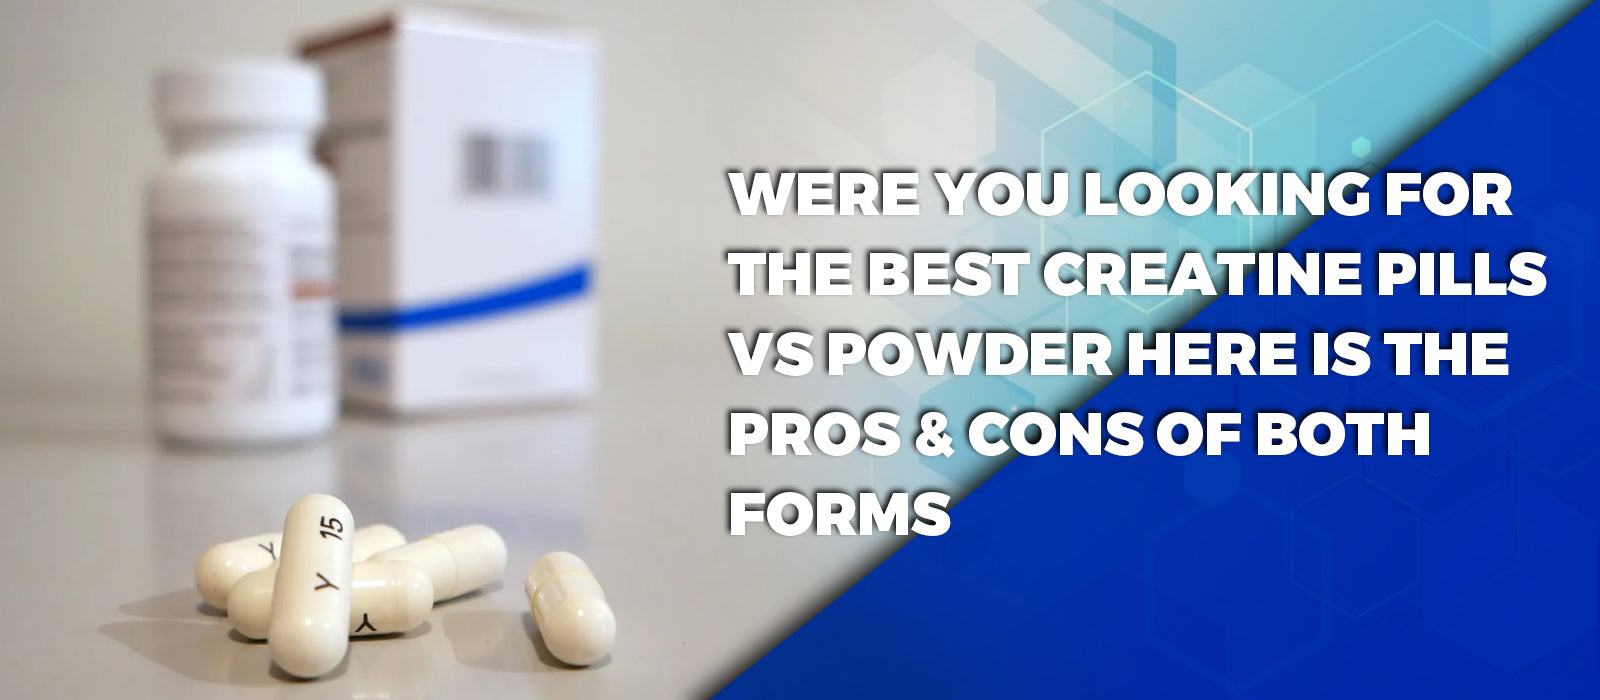 Powder creatine vs pill